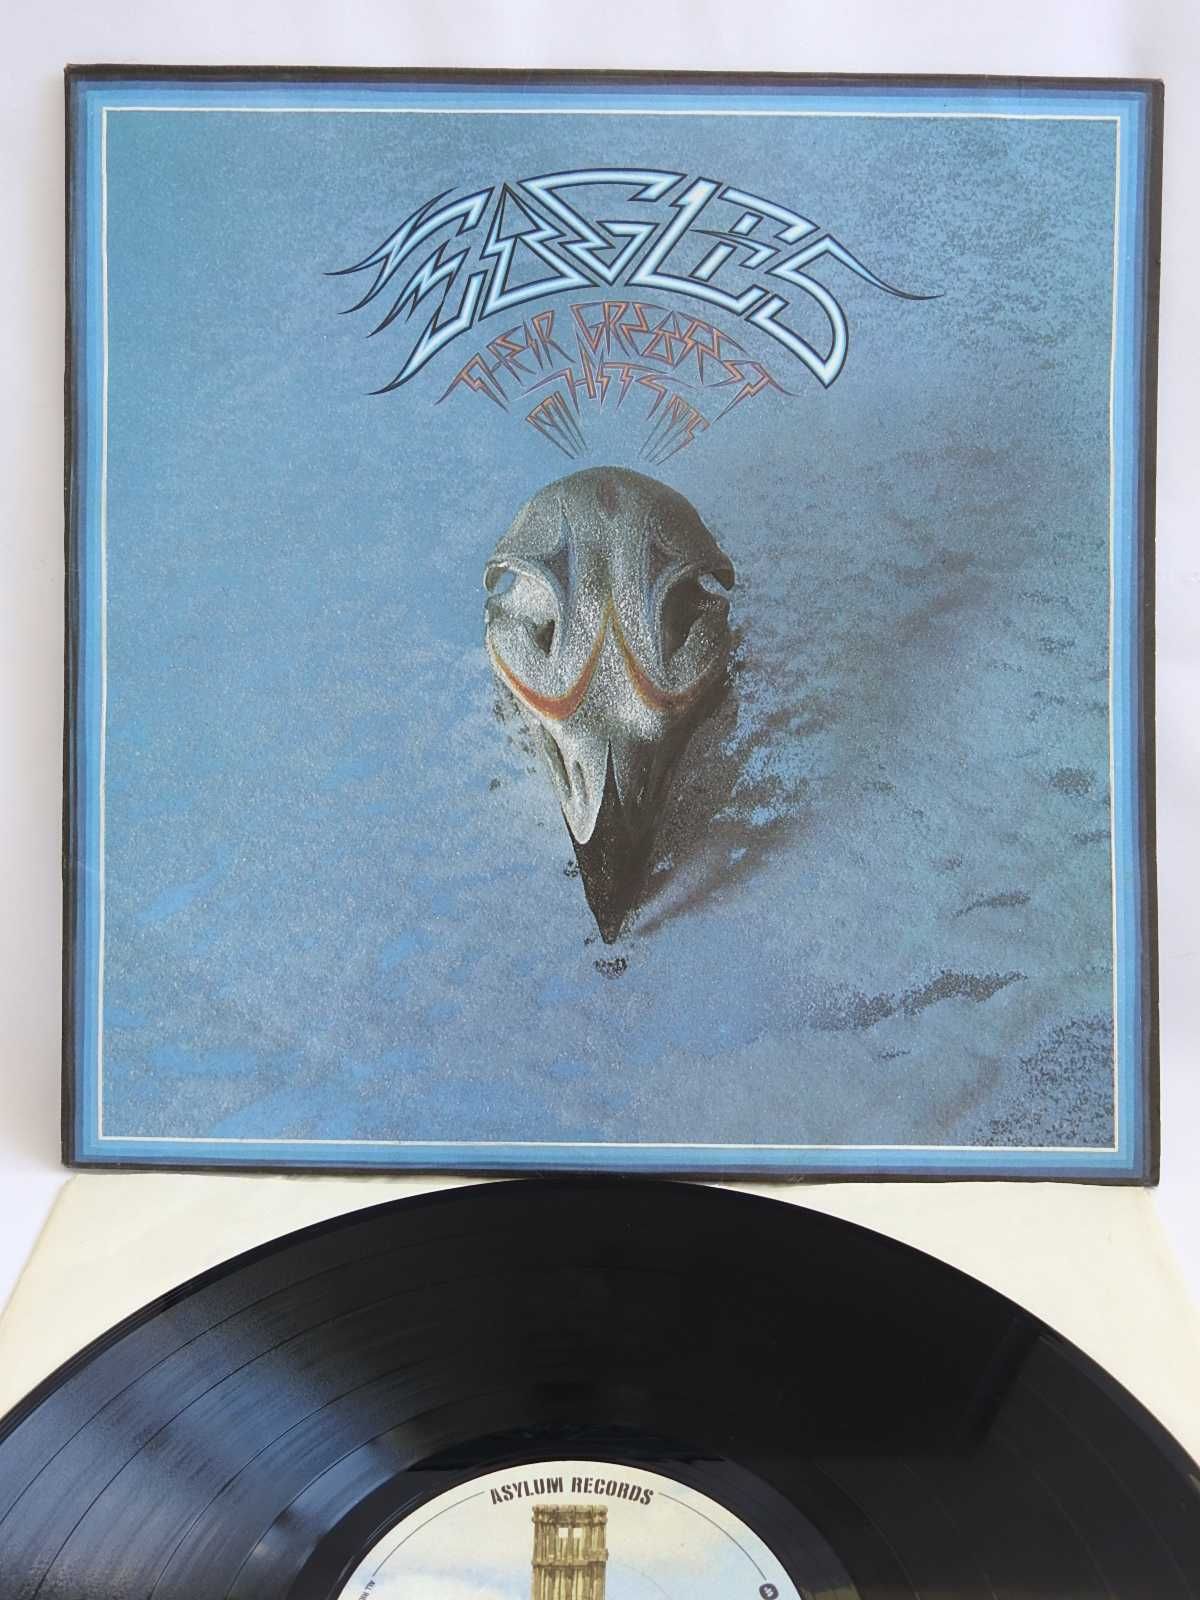 Eagles Their Greatest Hits (1971-1975) LP UK пластинка 1976 EX Британи